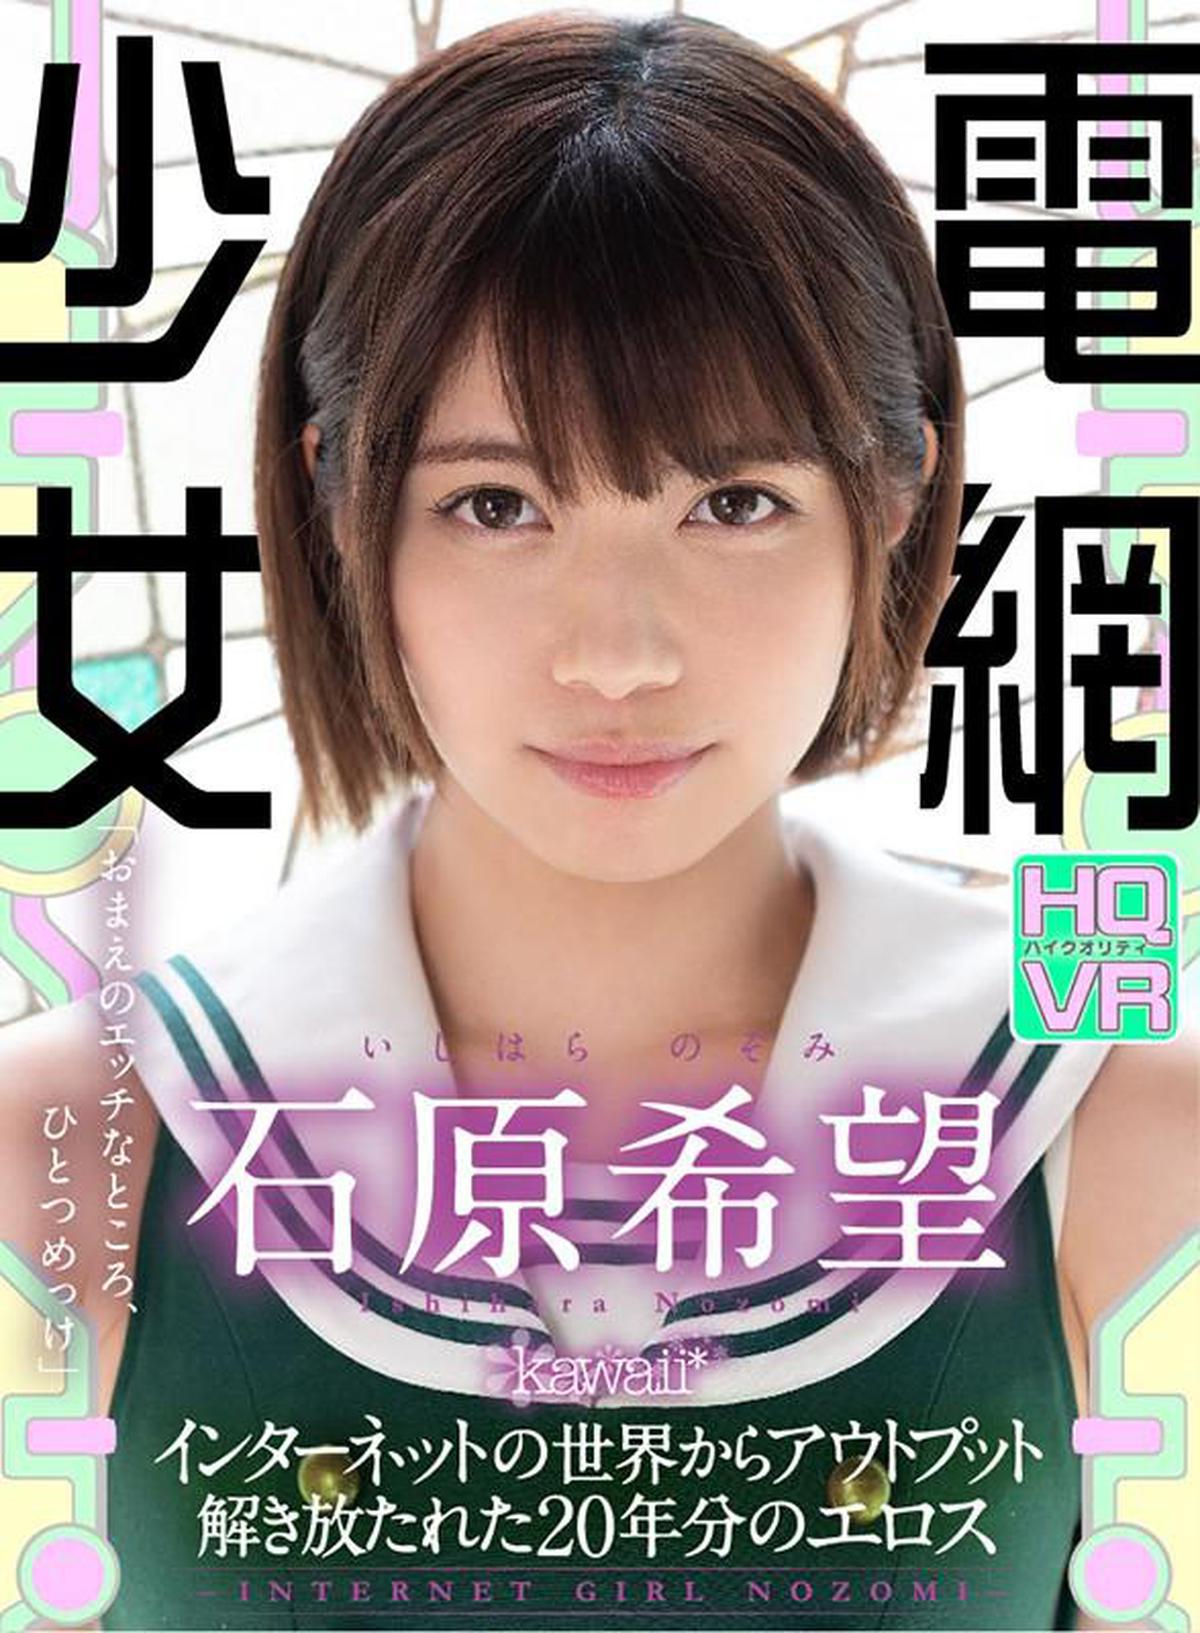 (VR) KAVR-097 Electric Net Girl -INTERNET GIRL NOZOMI- Unleashed 20 Years of Eros Ishihara Nozomi